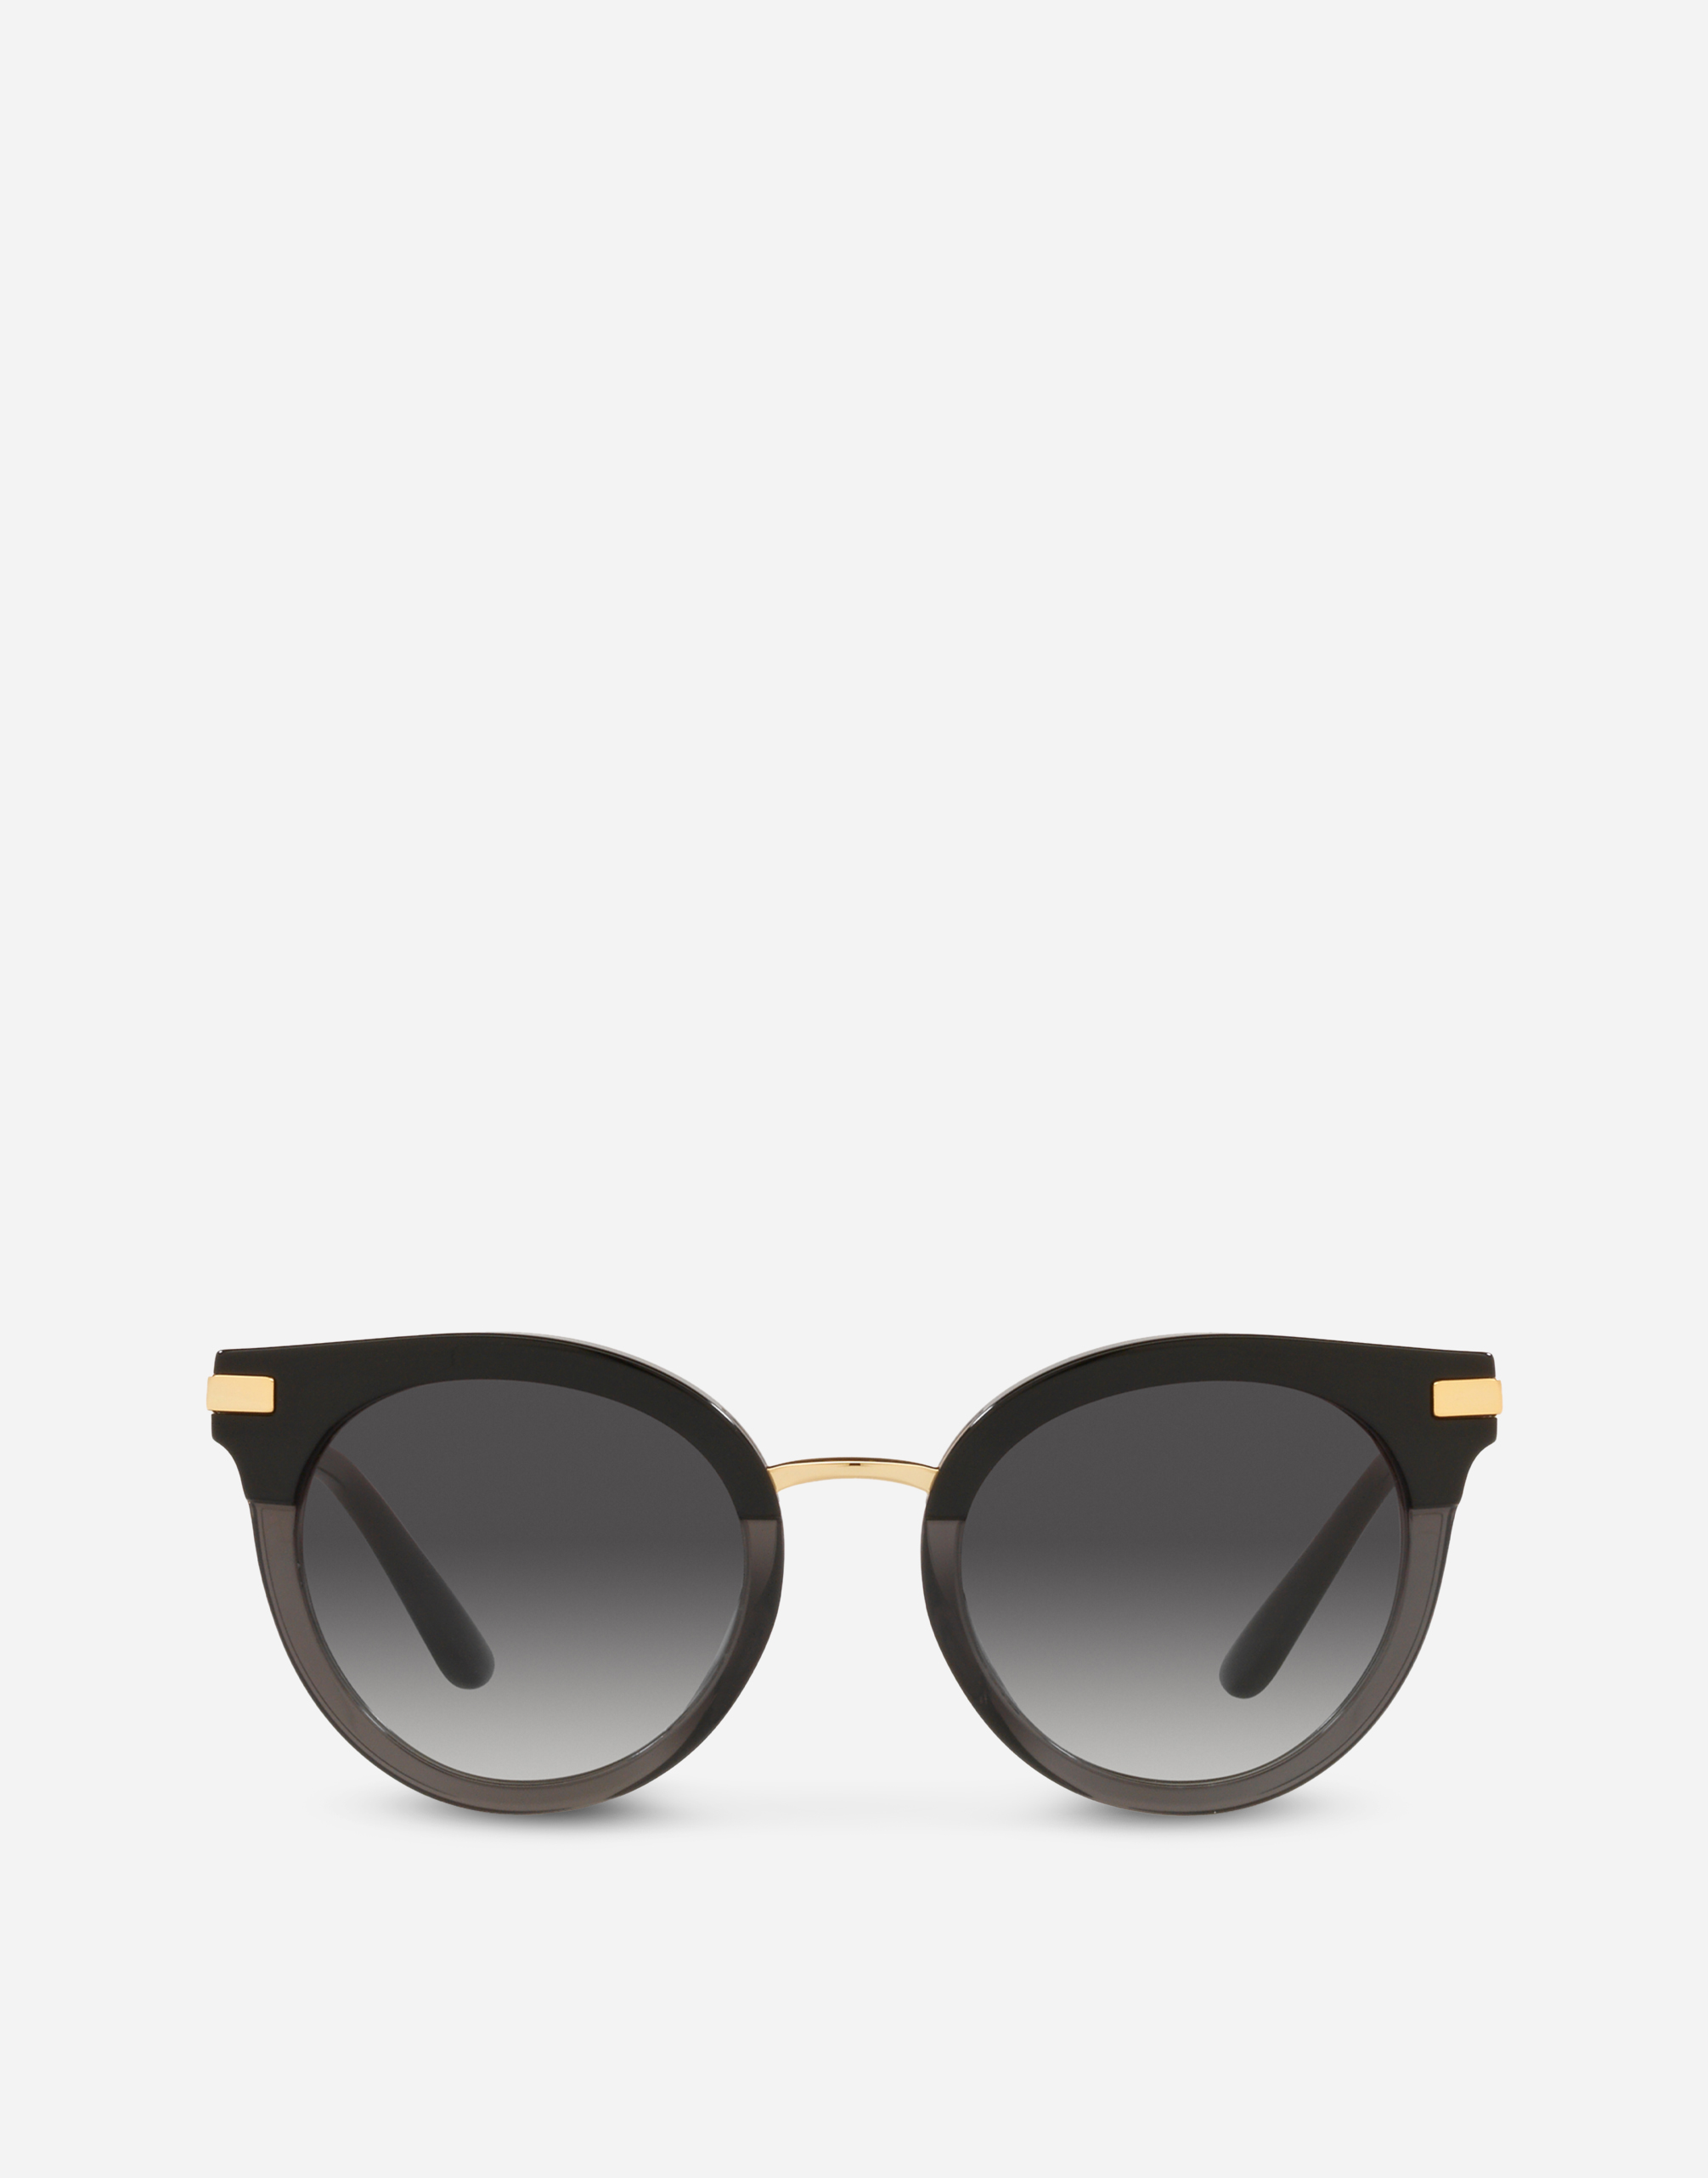 Half print sunglasses in Black